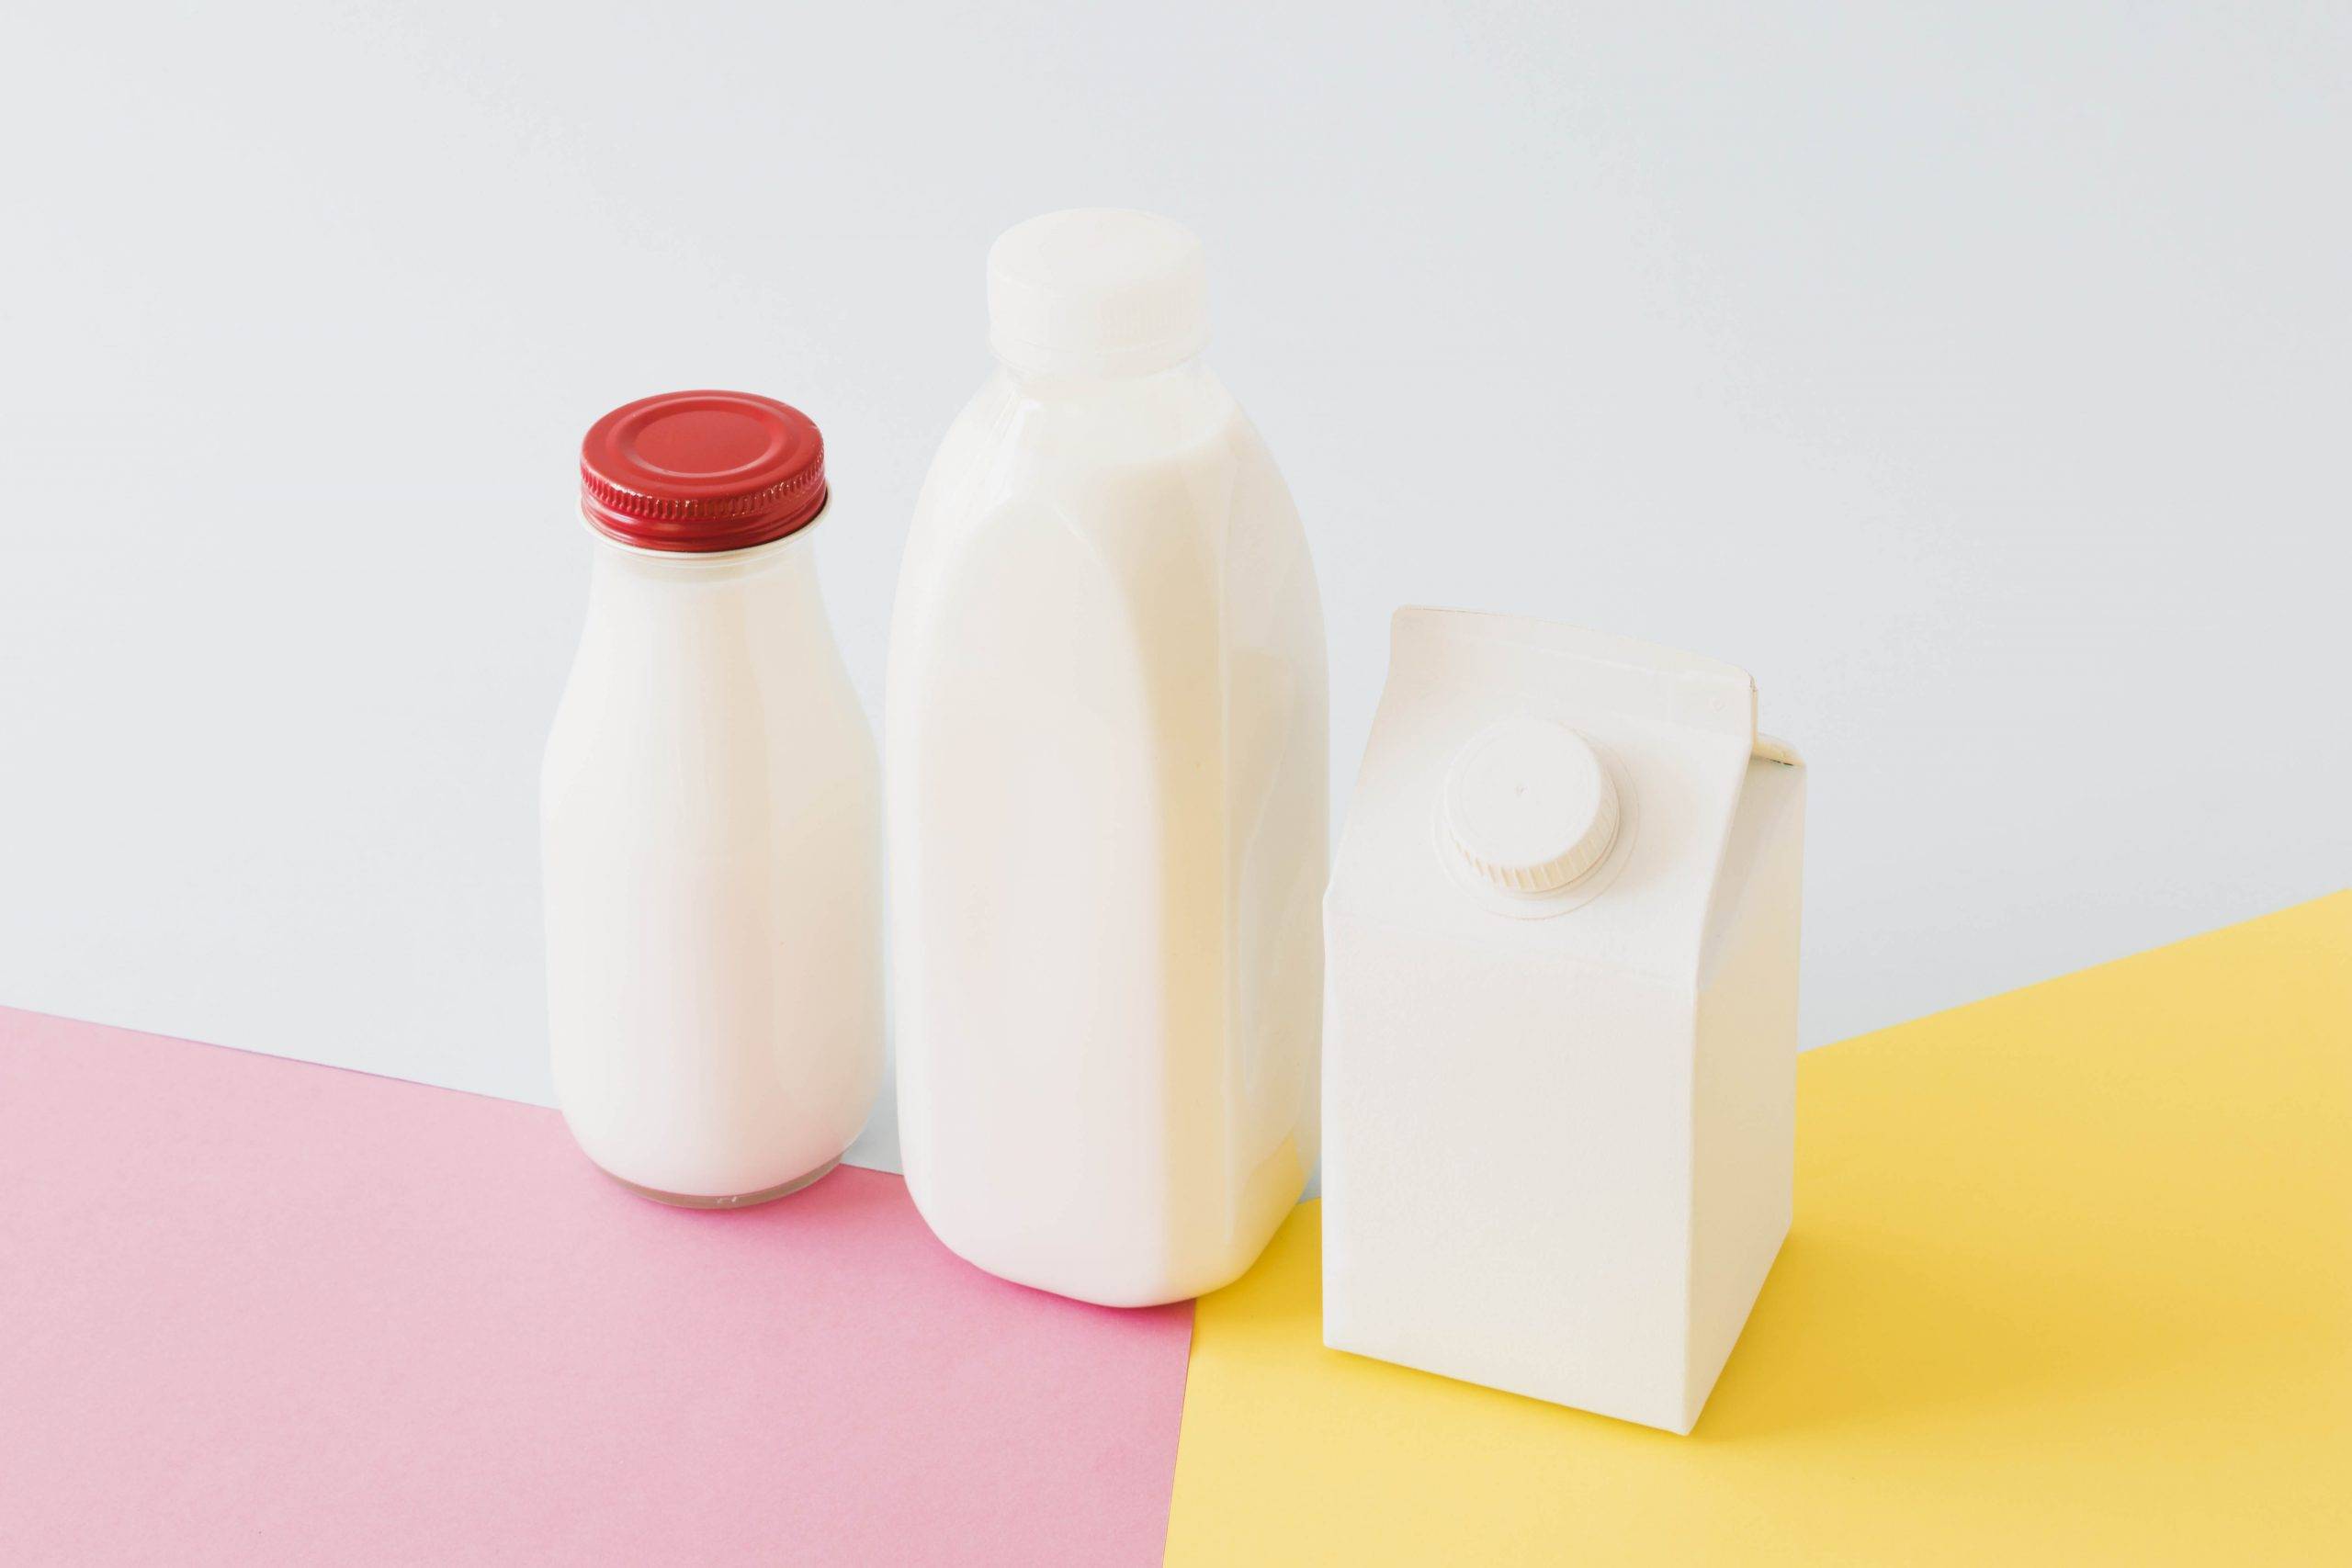 Rekomendasi Susu UHT Rendah Gula untuk Anak, Tinggi Kalsium